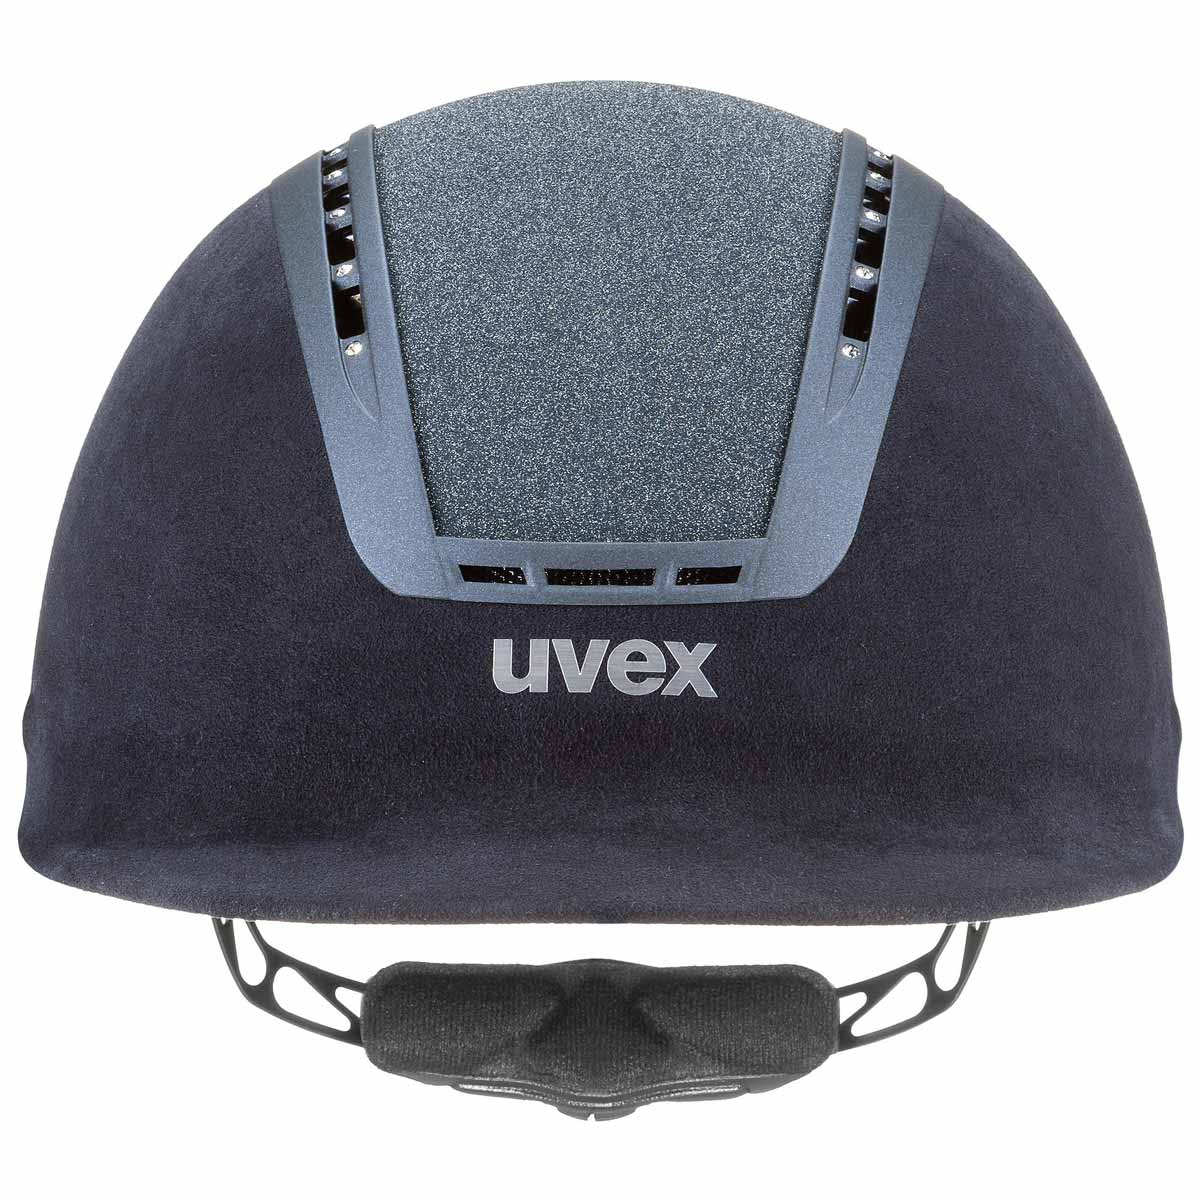 uvex suxxeed glamour riding helmet black XS/S